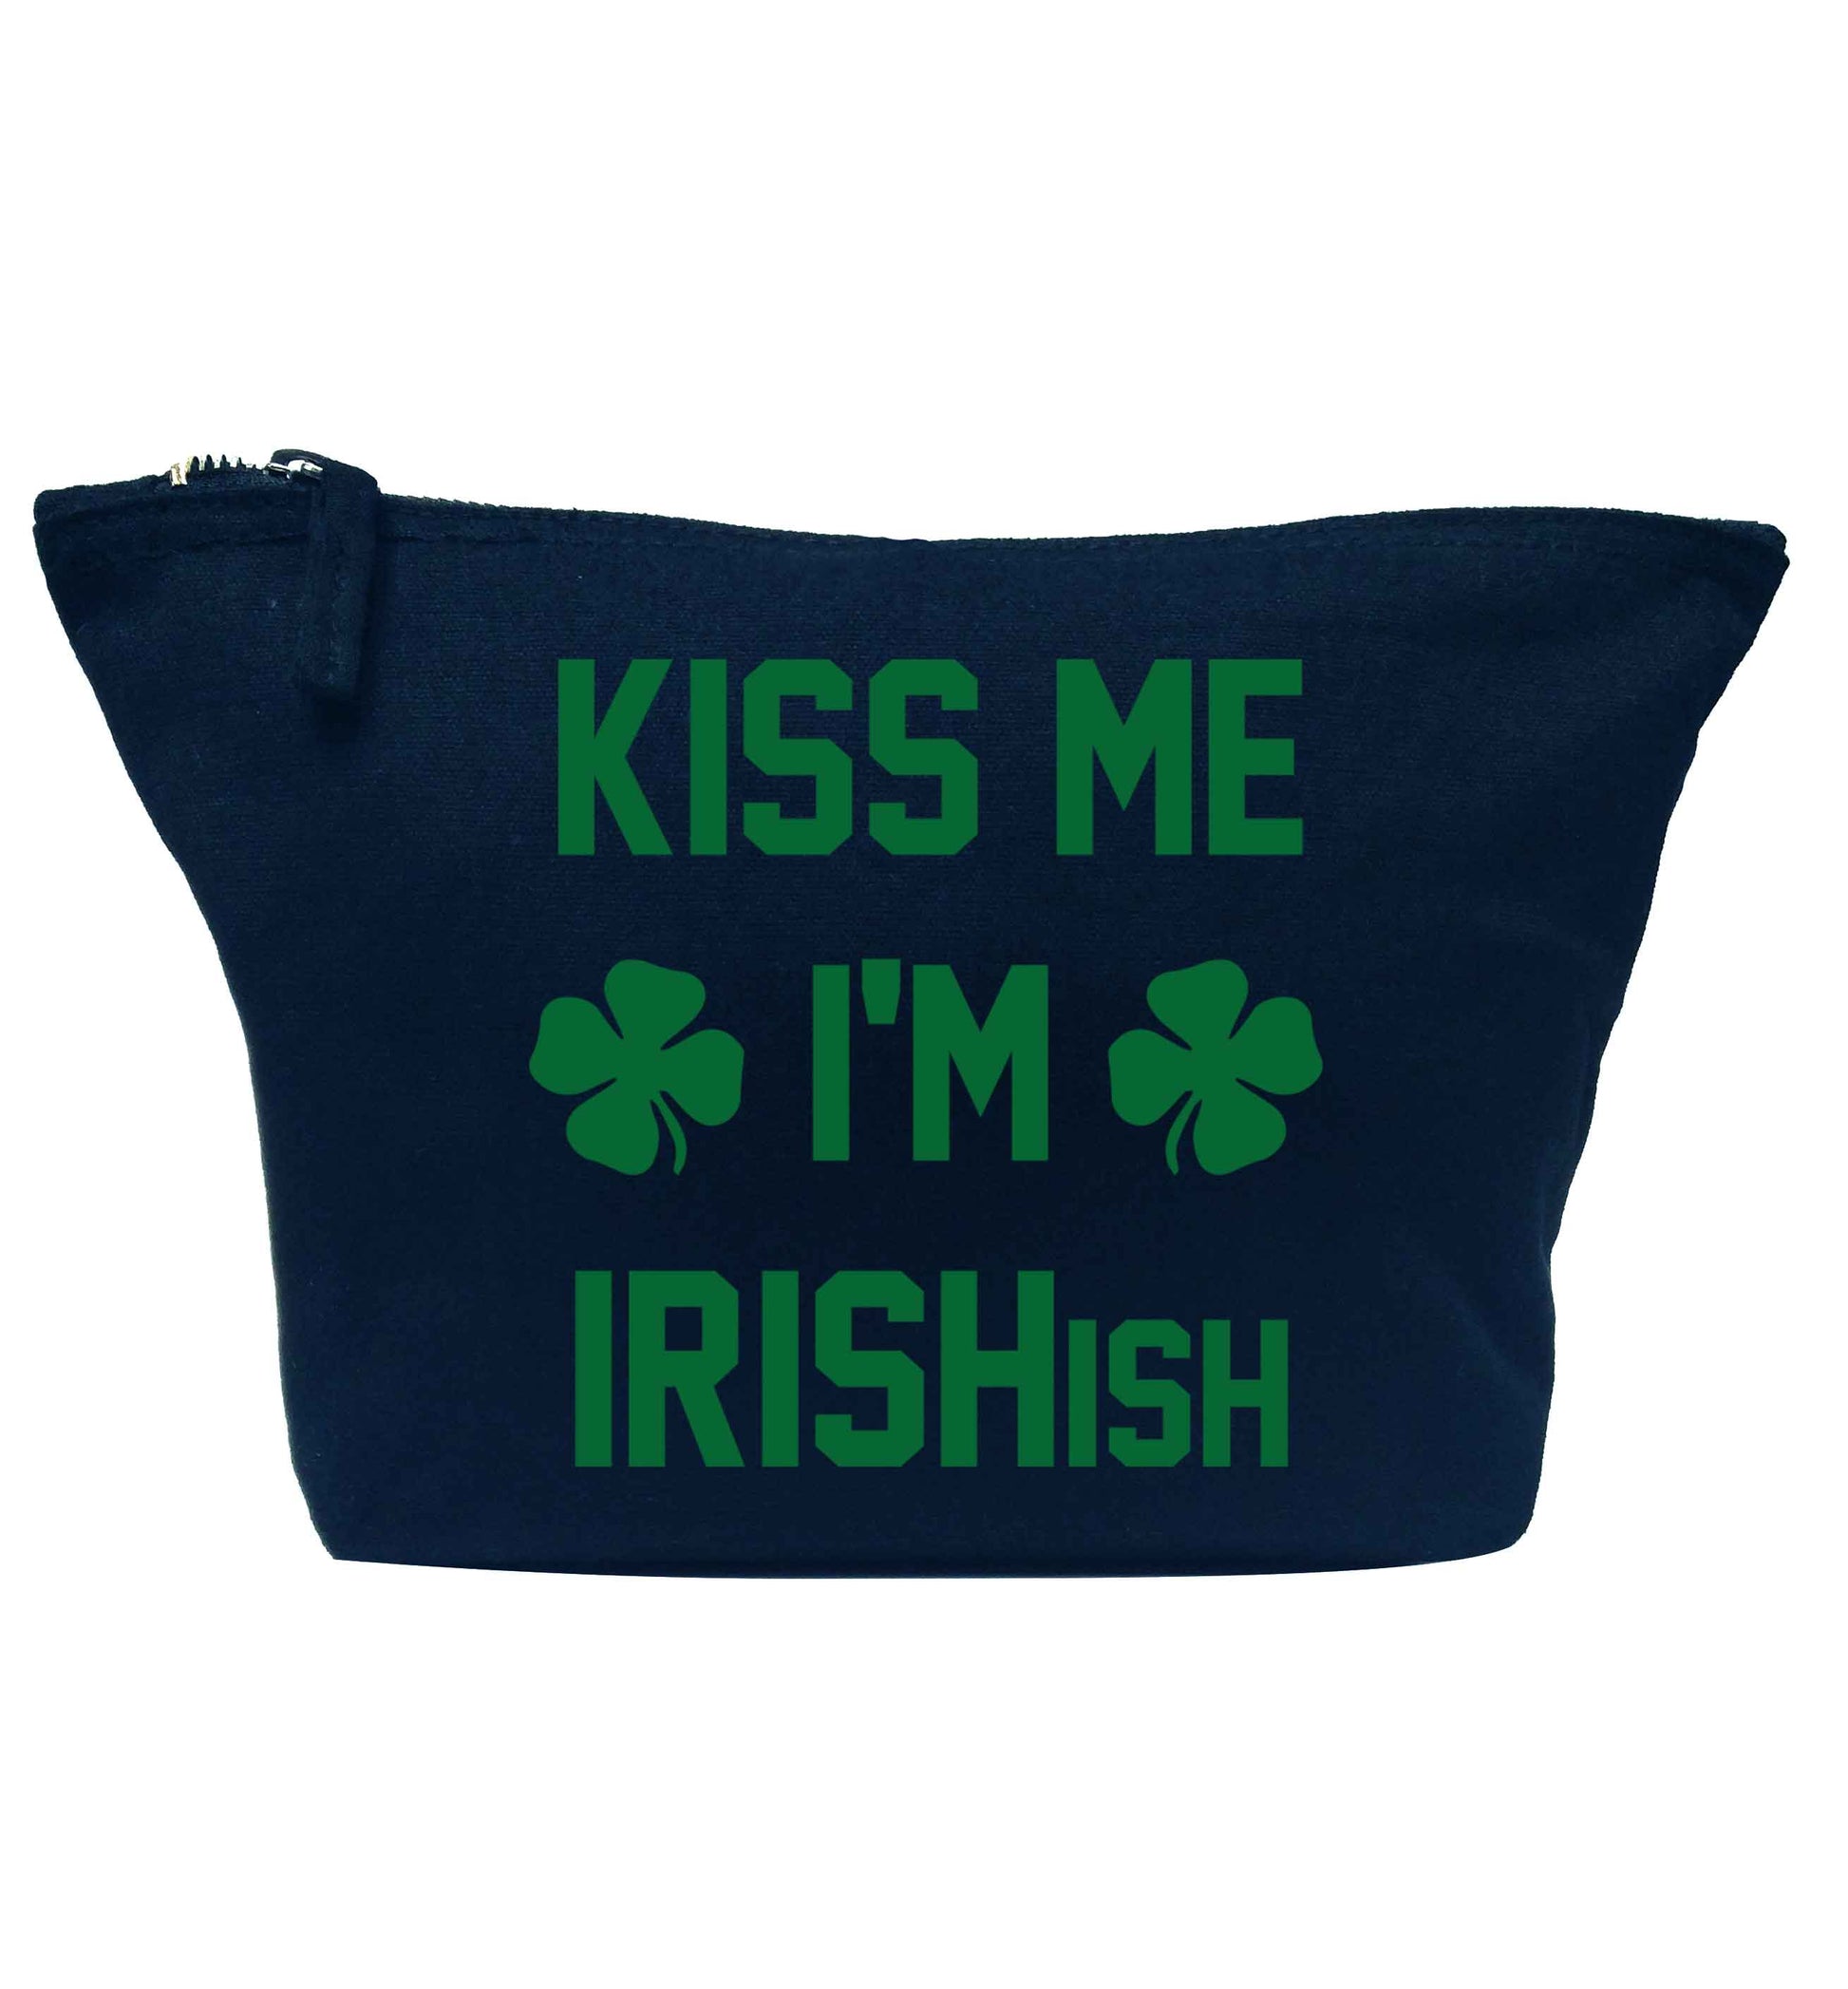 Kiss me I'm Irishish navy makeup bag